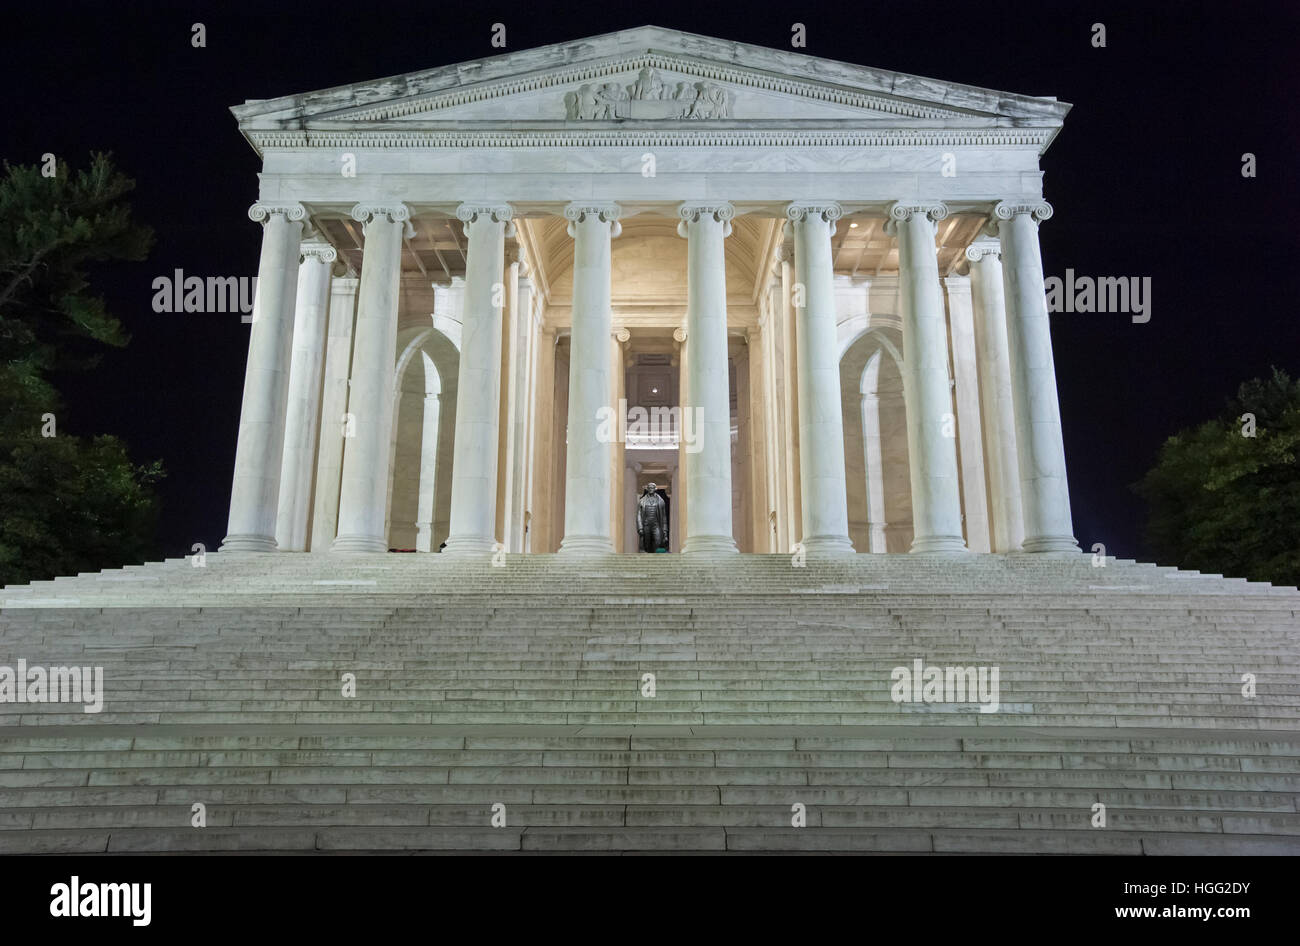 Jefferson Memorial, Washington, D.C., at night. Stock Photo